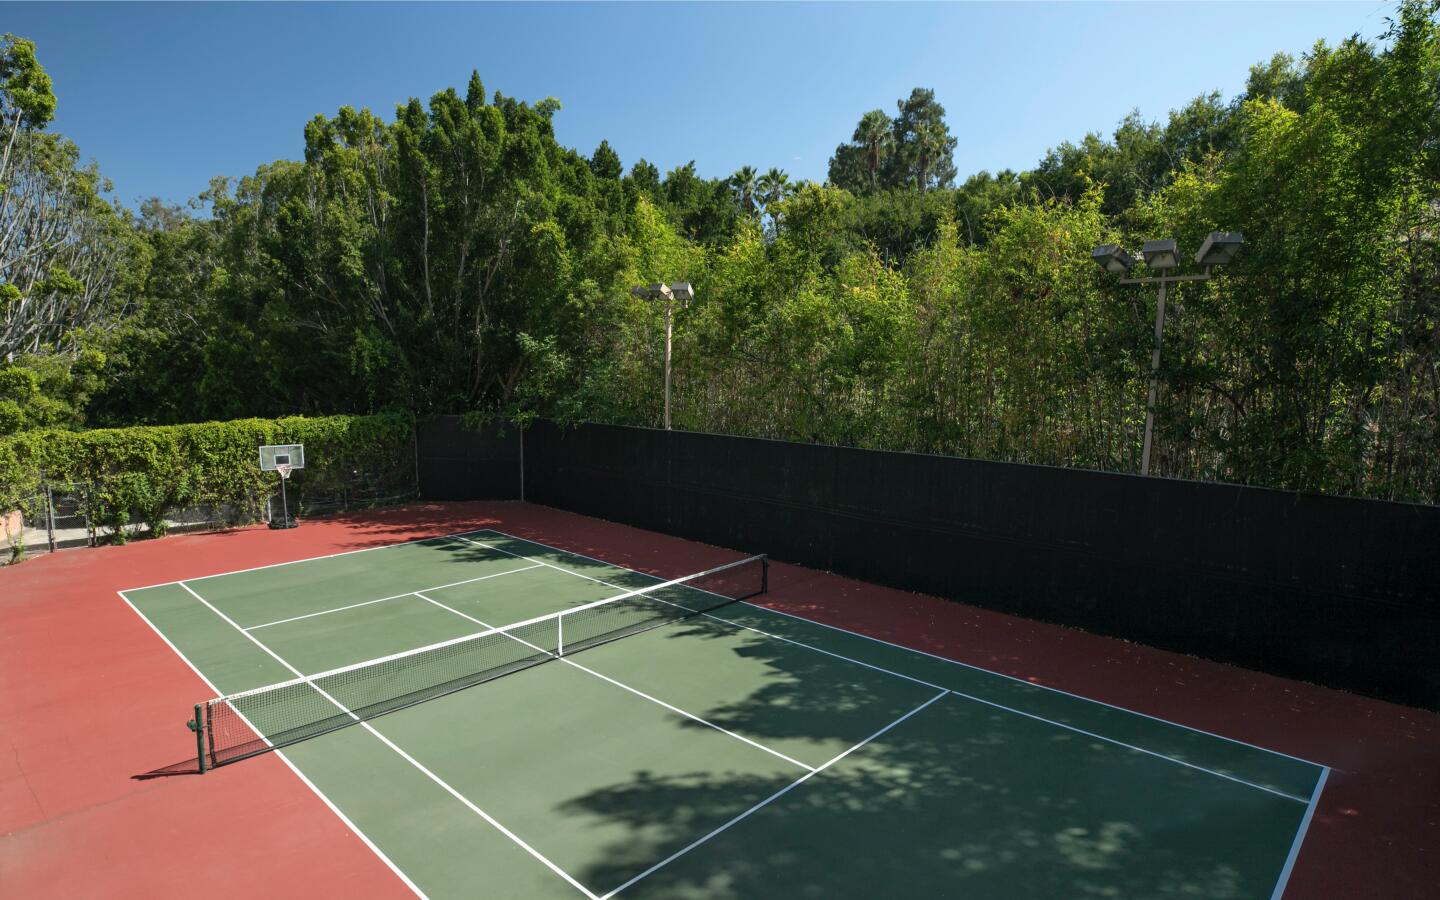 The tennis court.